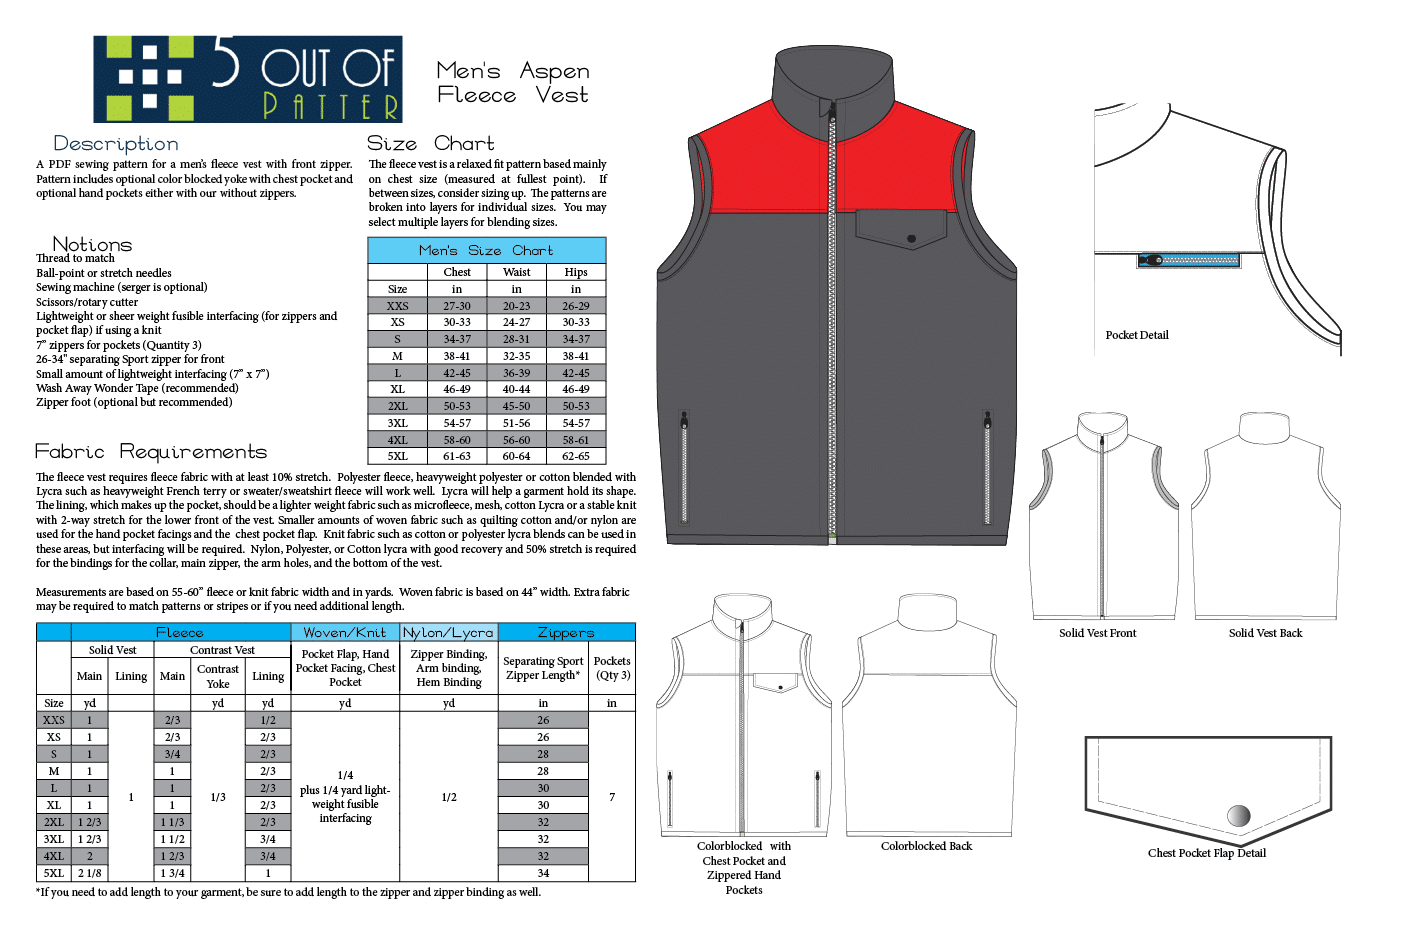 Aspen and Redwood Vest Bundle - 5 out of 4 Patterns